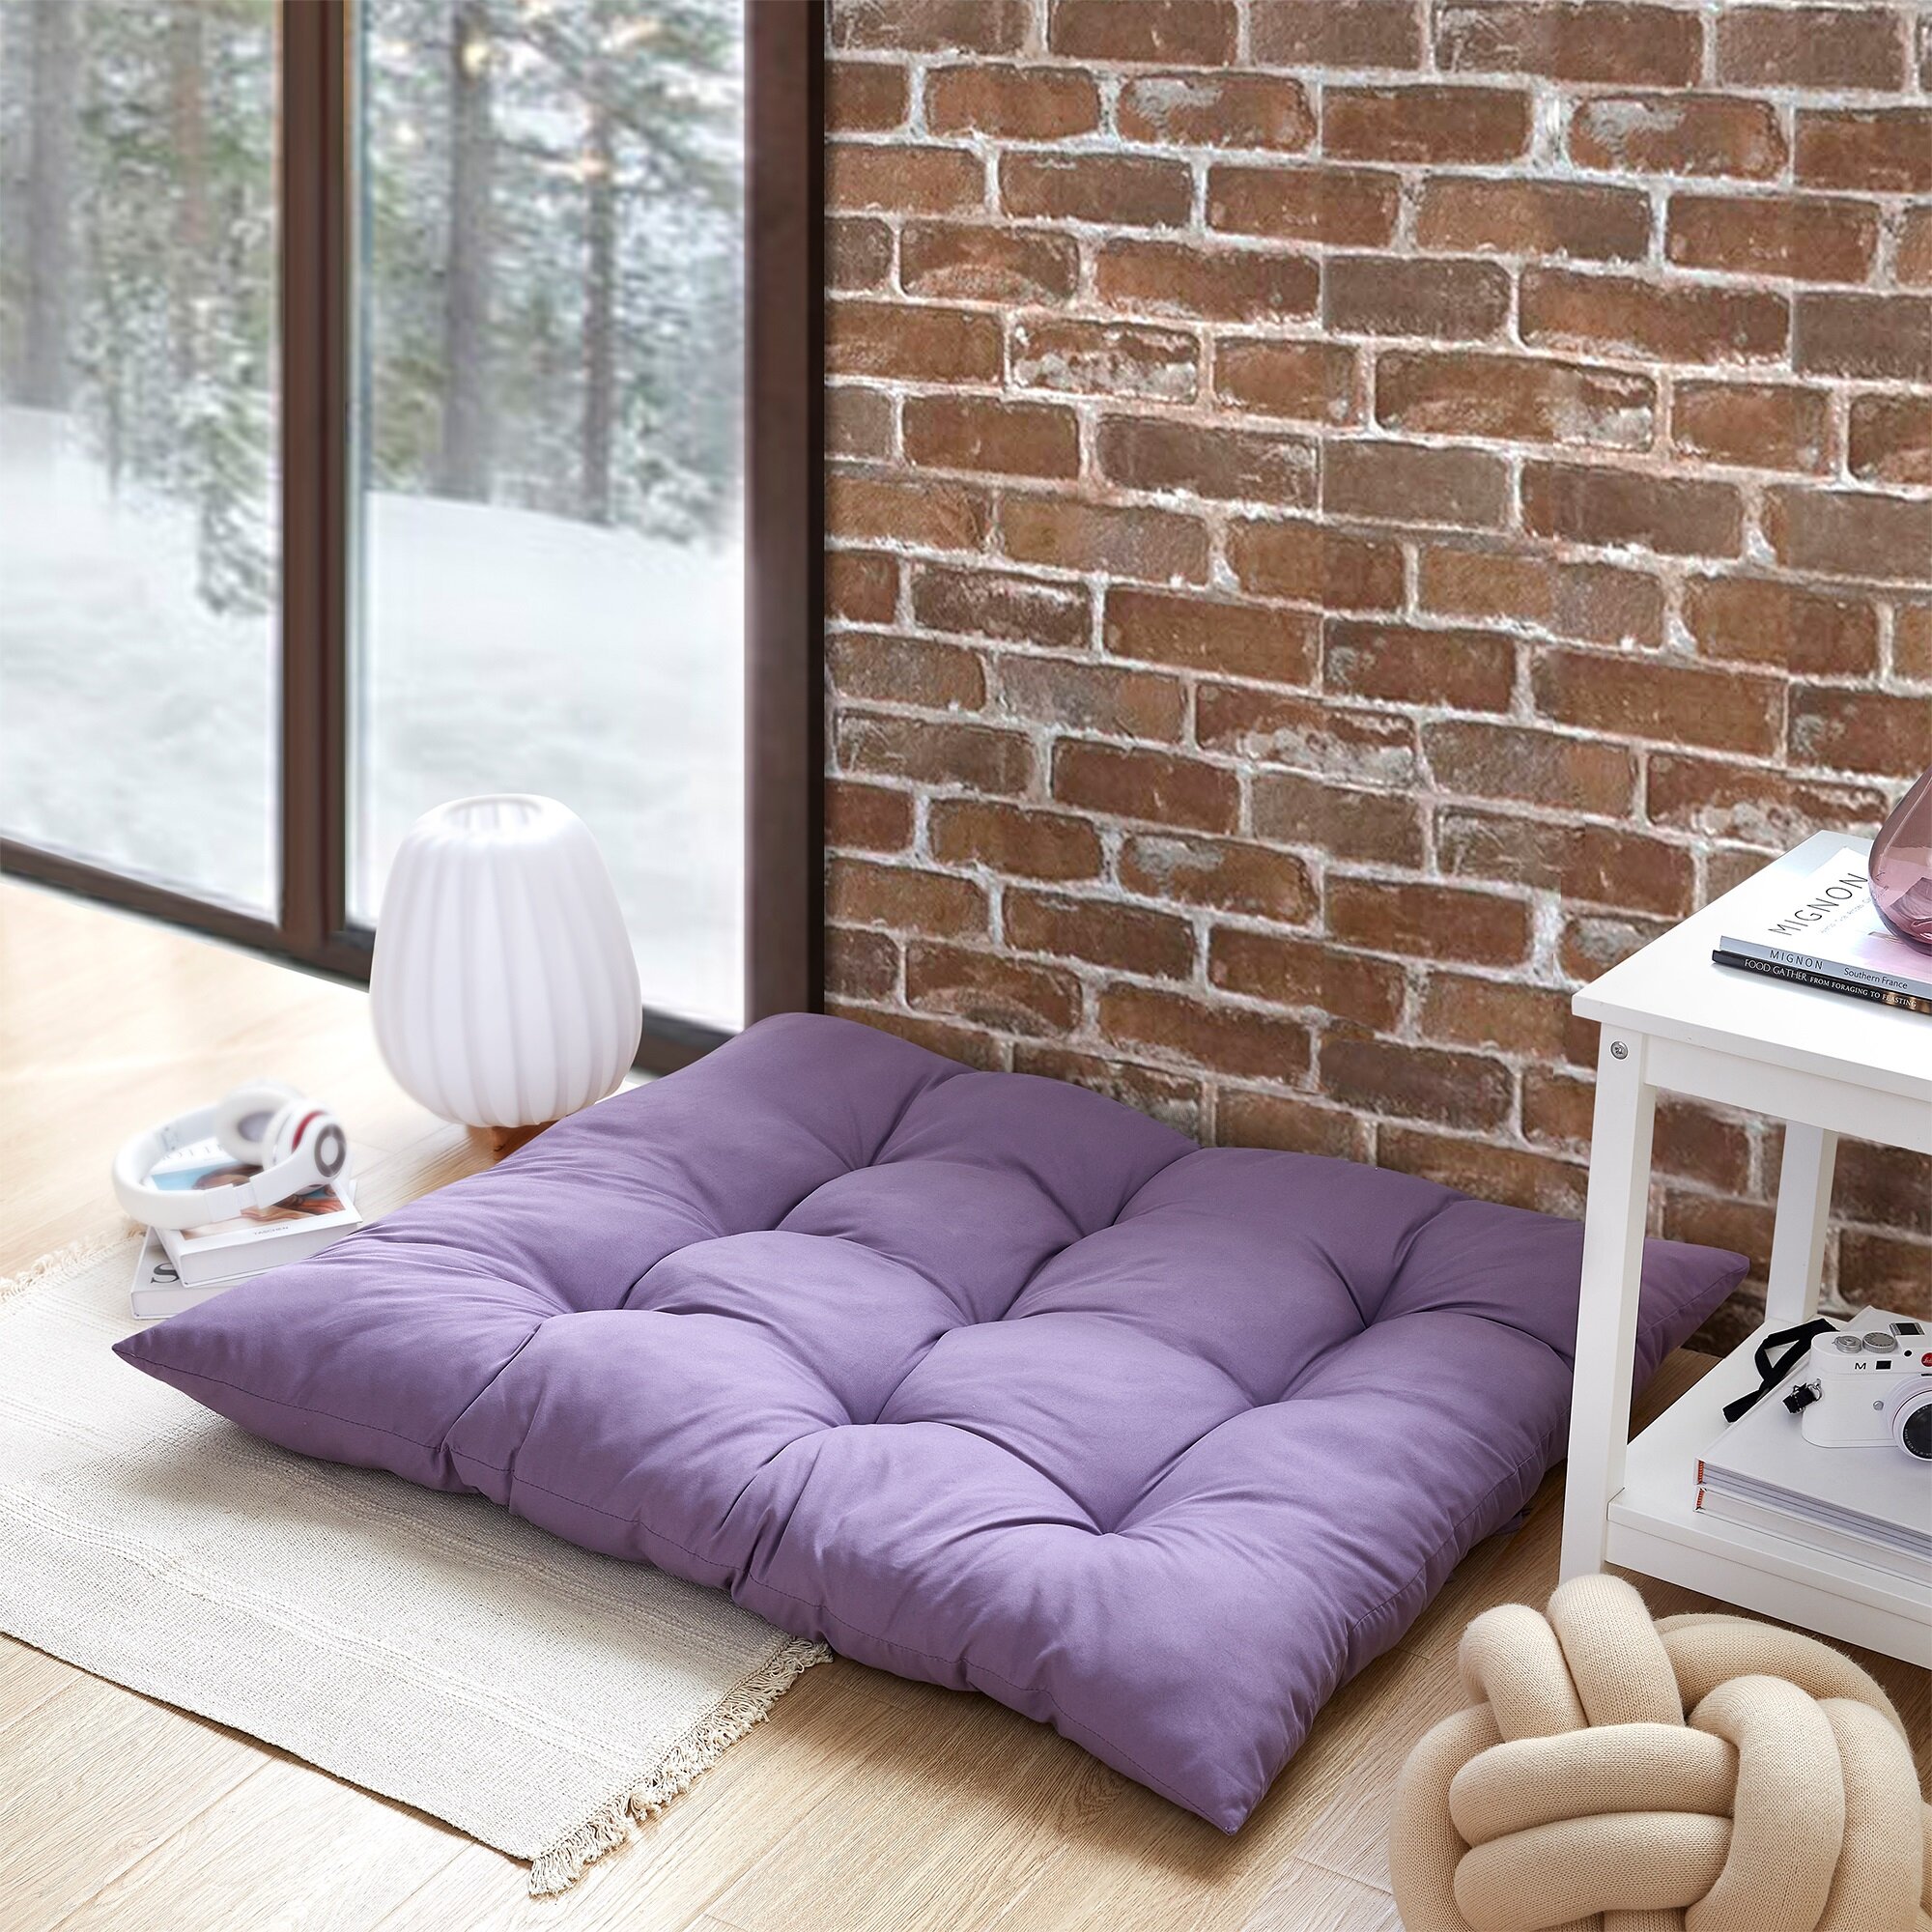 DormCo Rainha - Ultra Thick Tufted Floor Pillow - Natural Tan